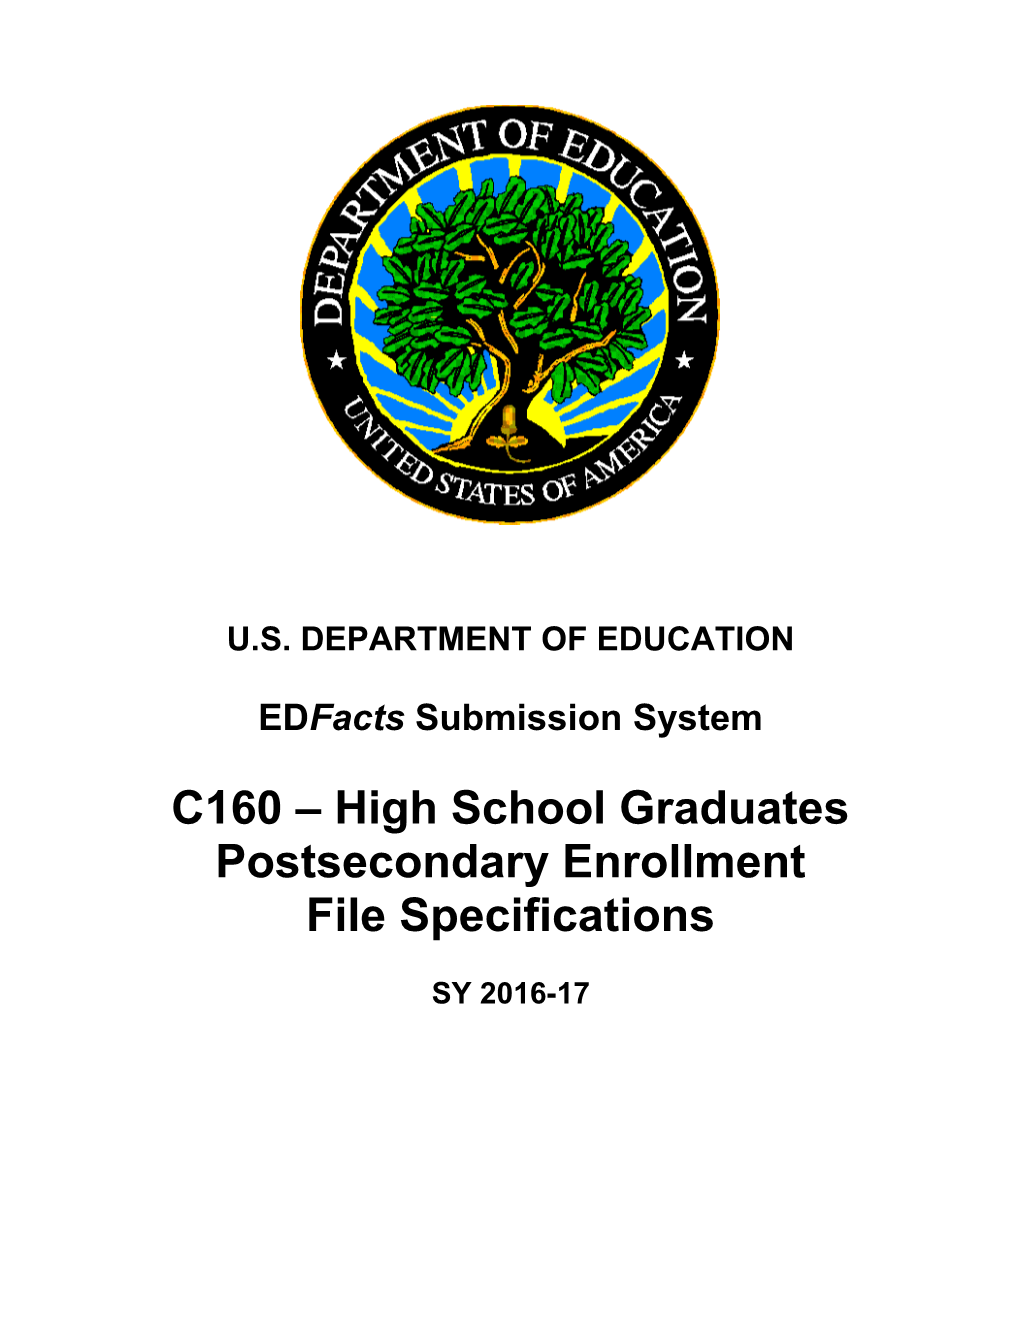 High School Graduates Postsecondary Enrollment File Specification (Msword)